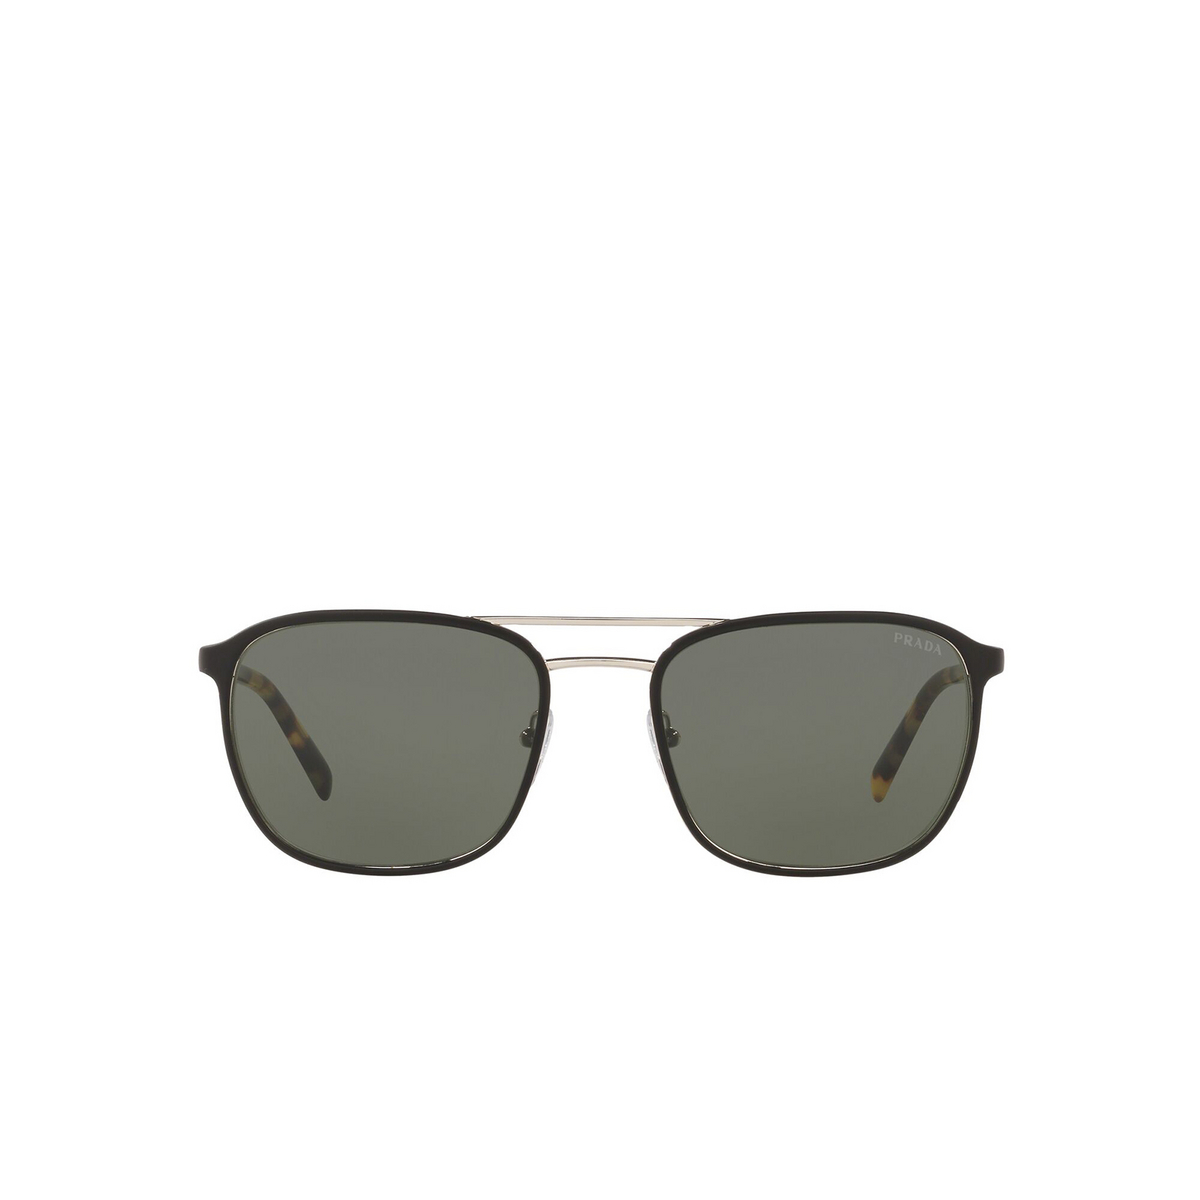 Prada CONCEPTUAL Sunglasses 5240B2 Top Matte Black on Silver - front view